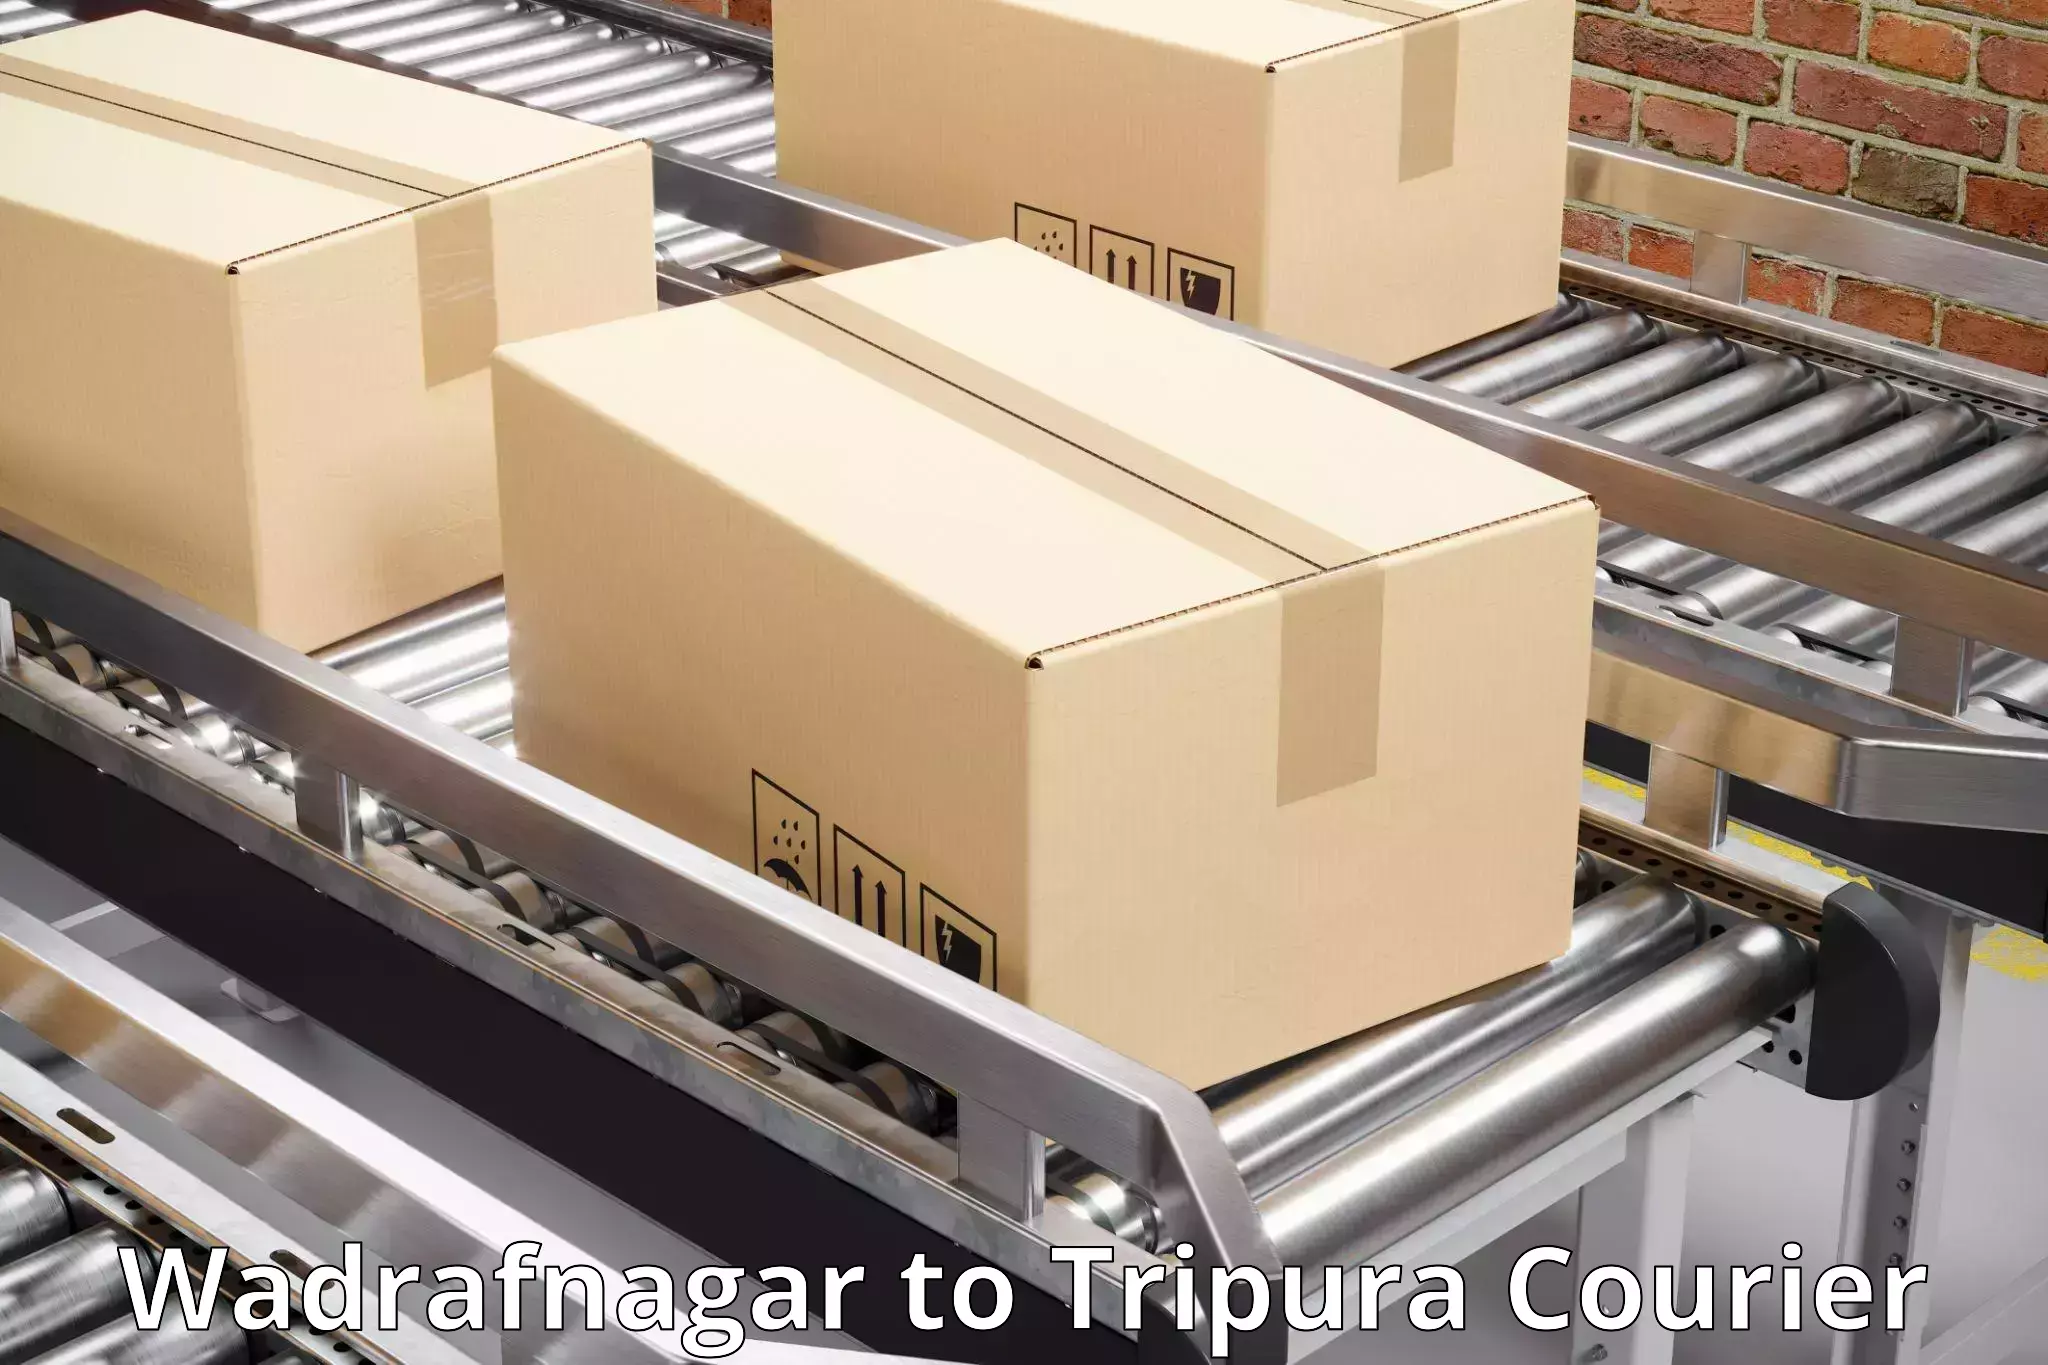 Effective logistics strategies Wadrafnagar to Udaipur Tripura